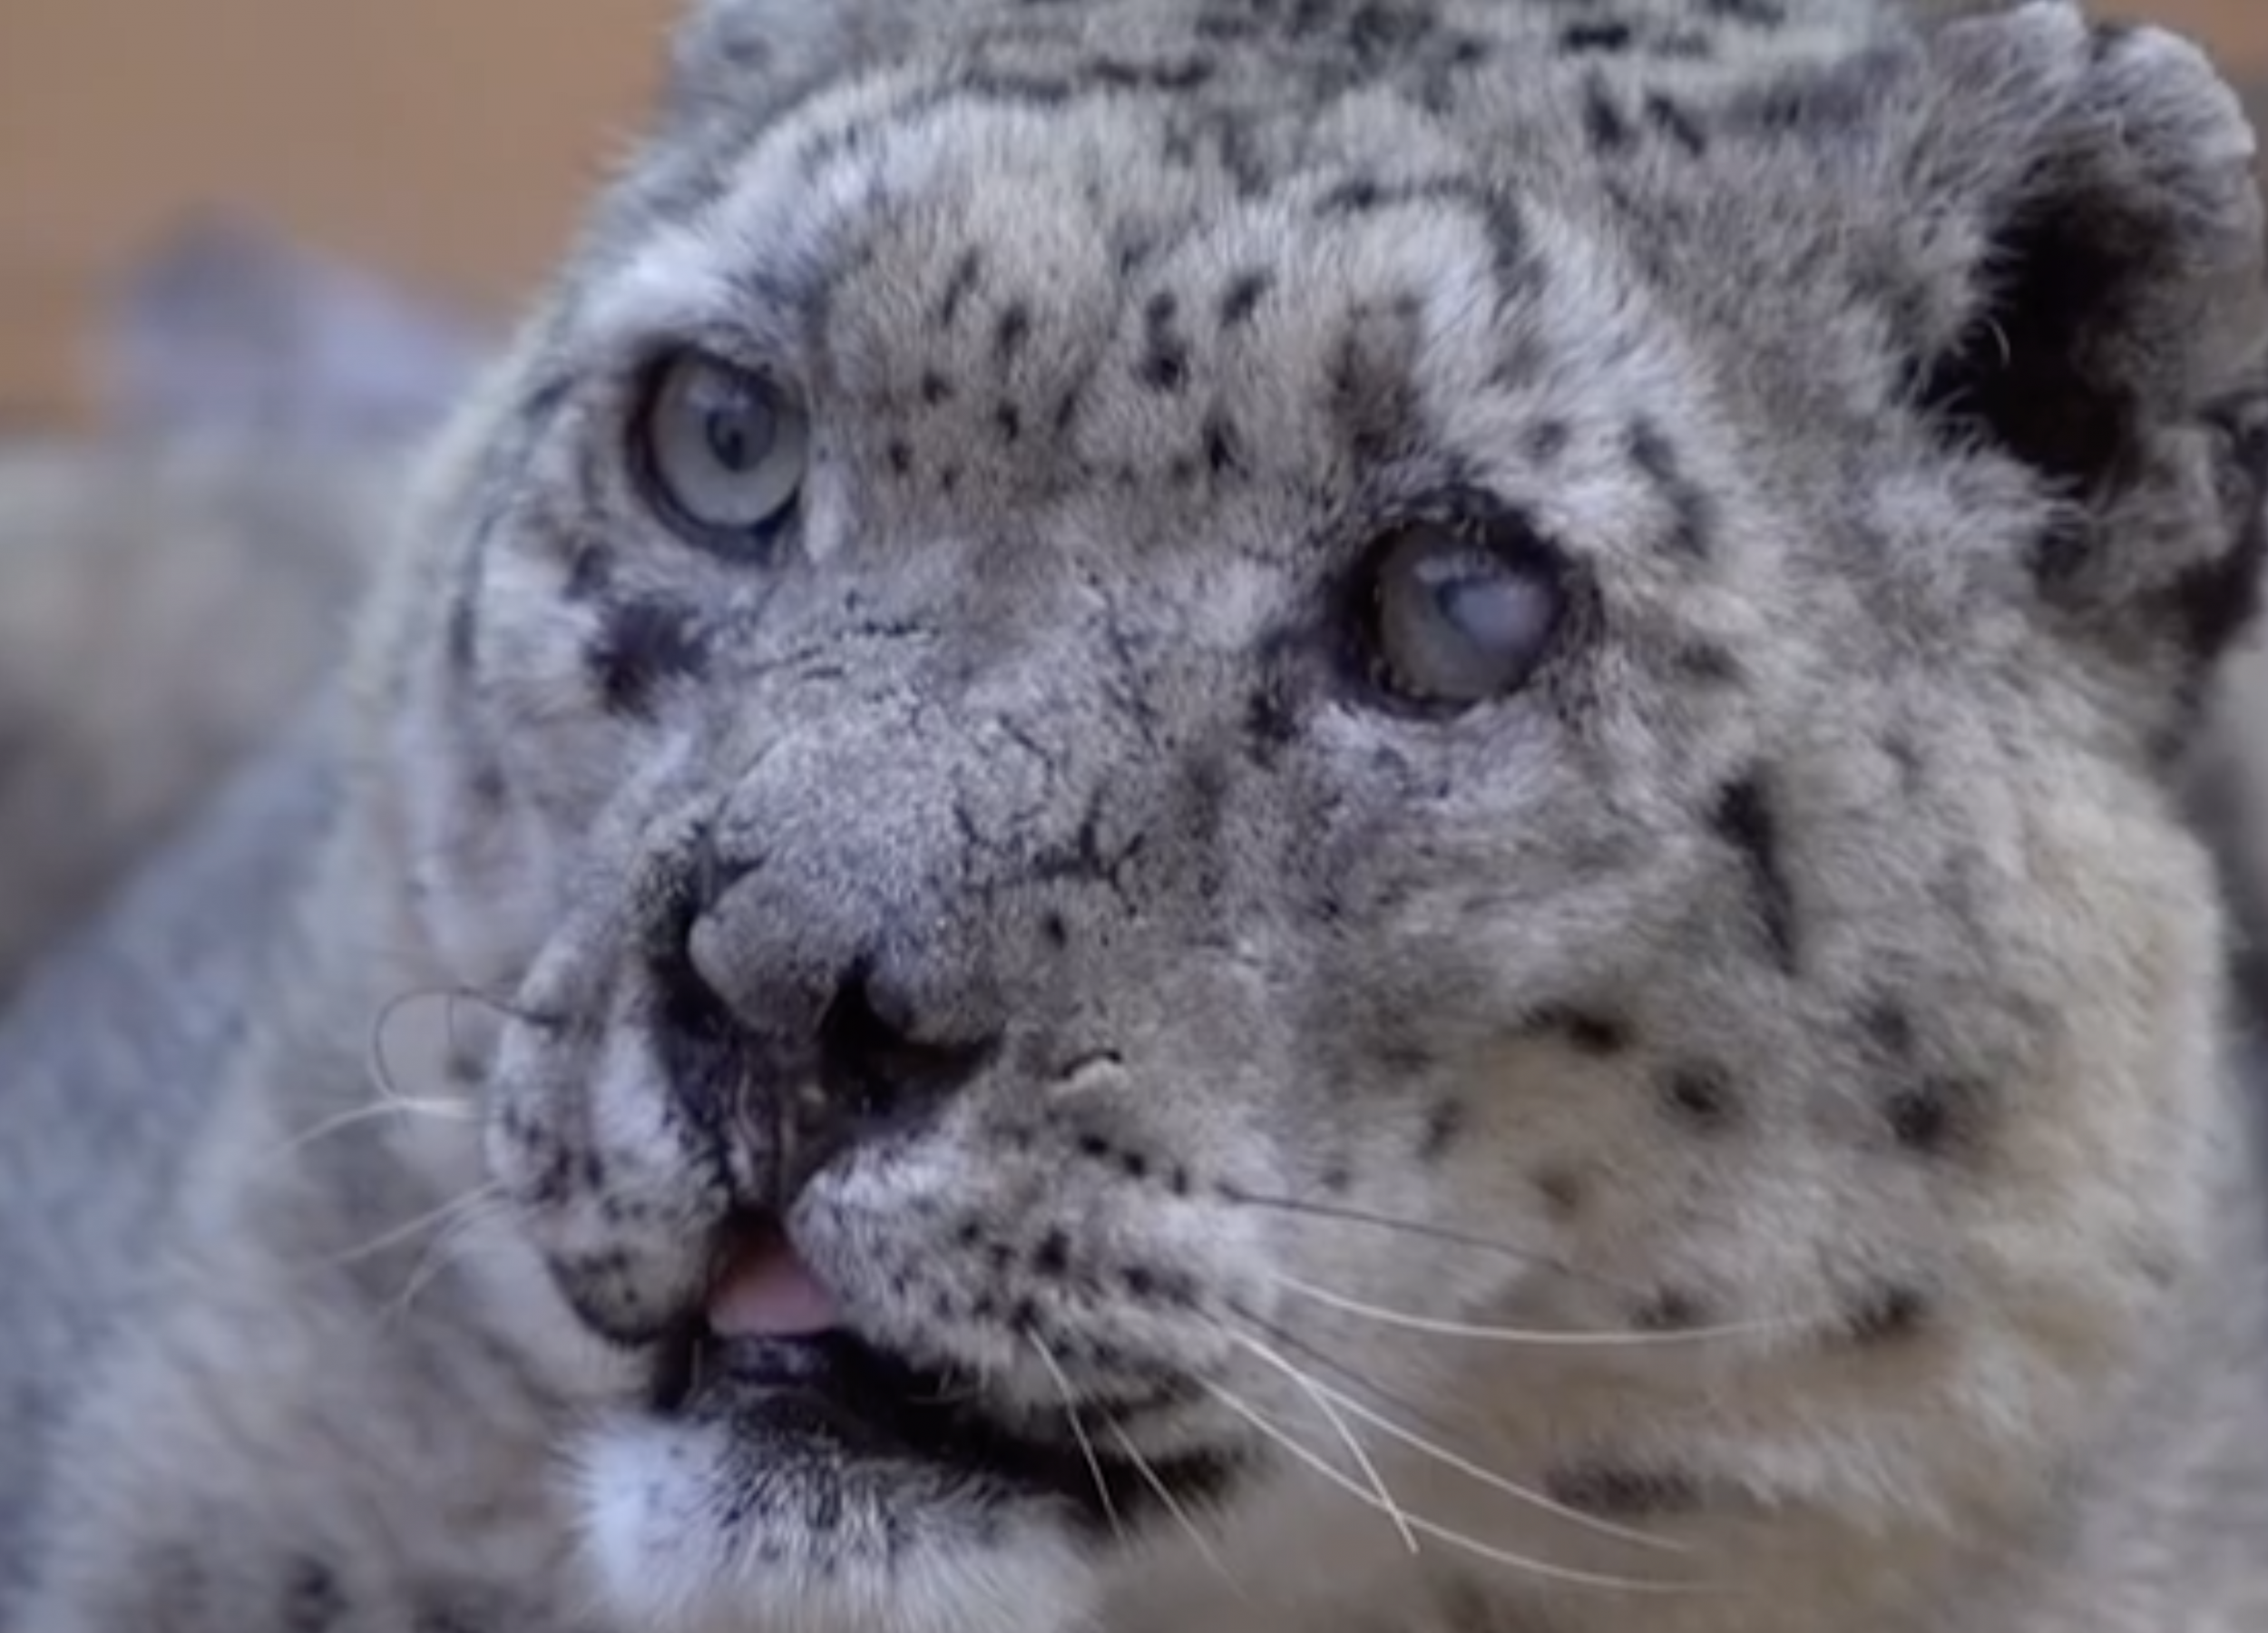 snow leopard eyes